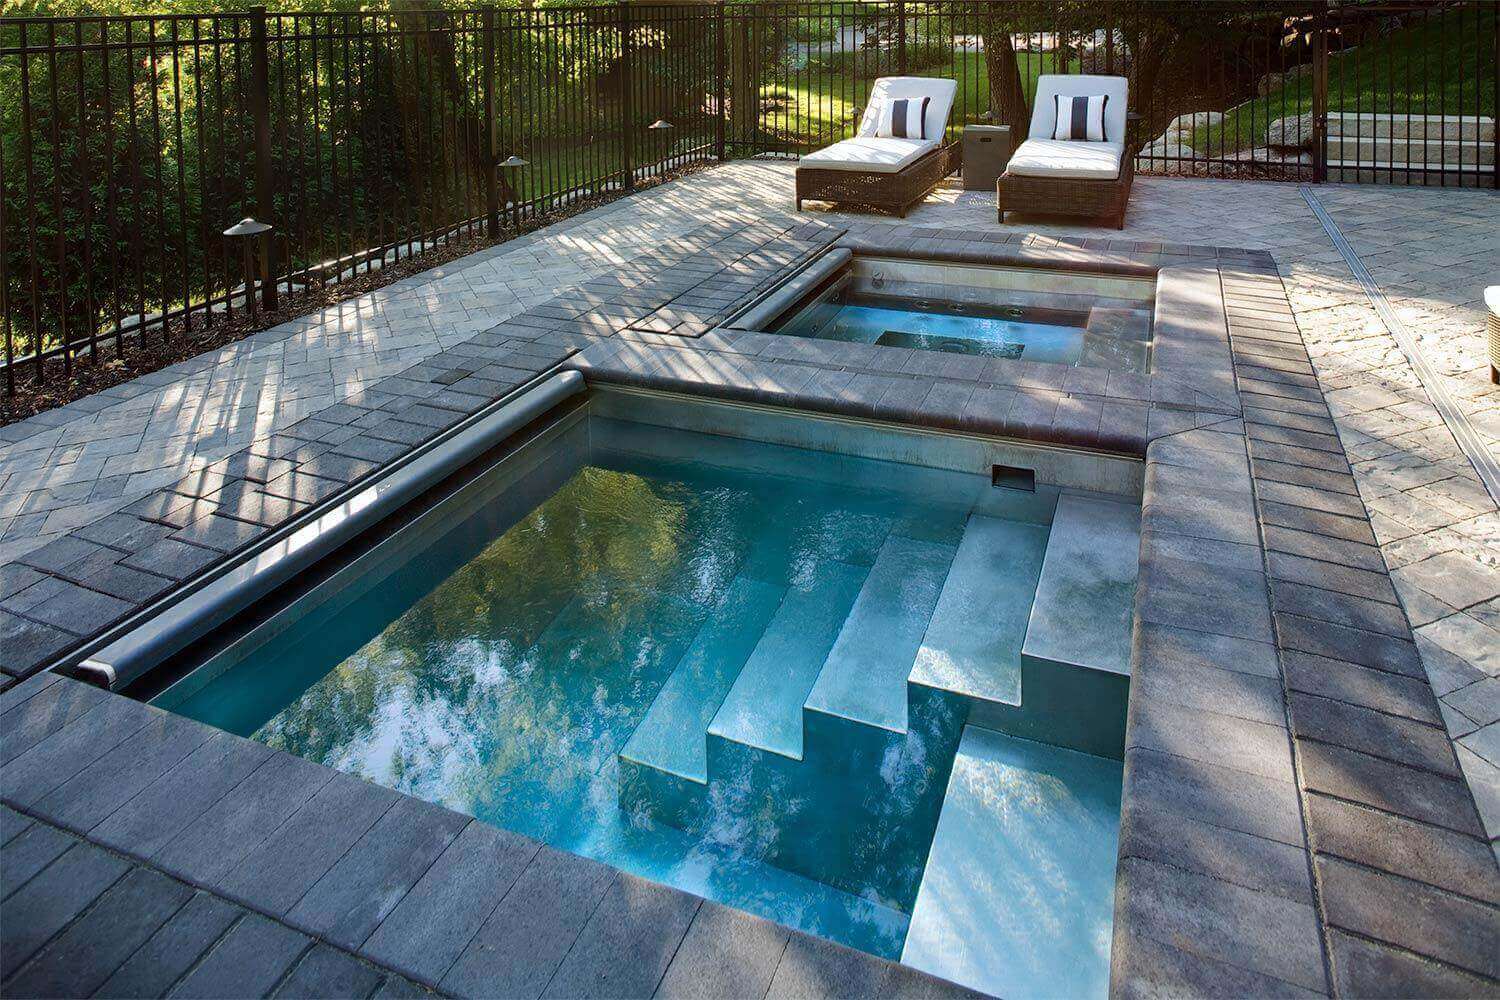 plunge pool design